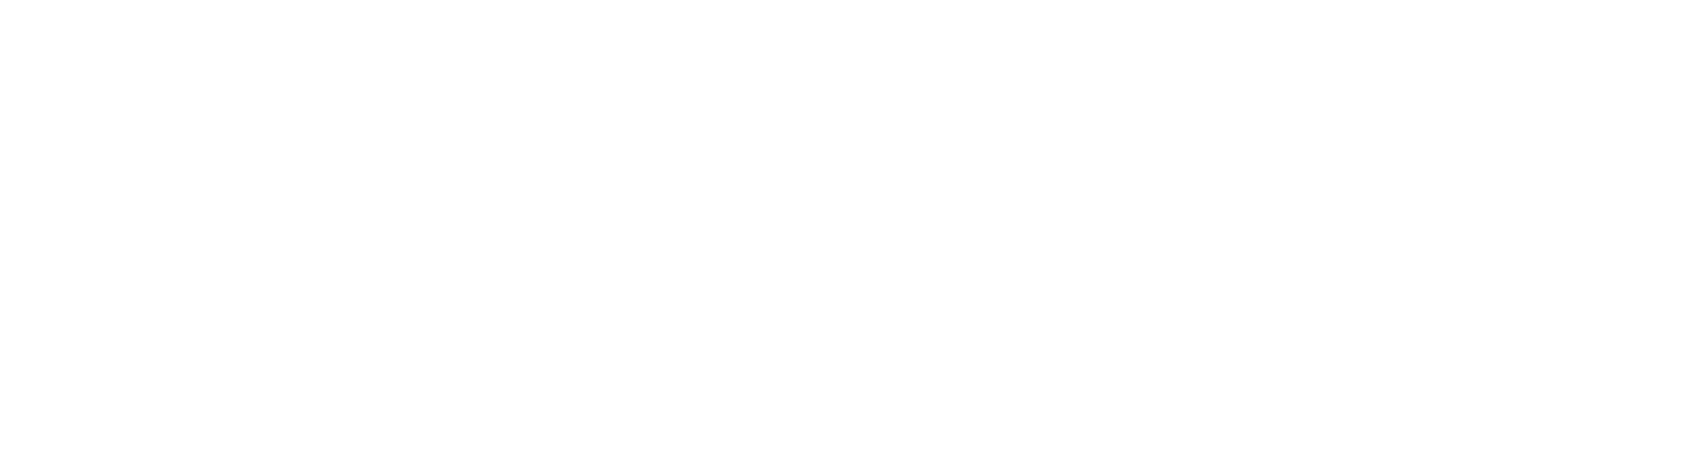 FIGS logo large for dark backgrounds (transparent PNG)